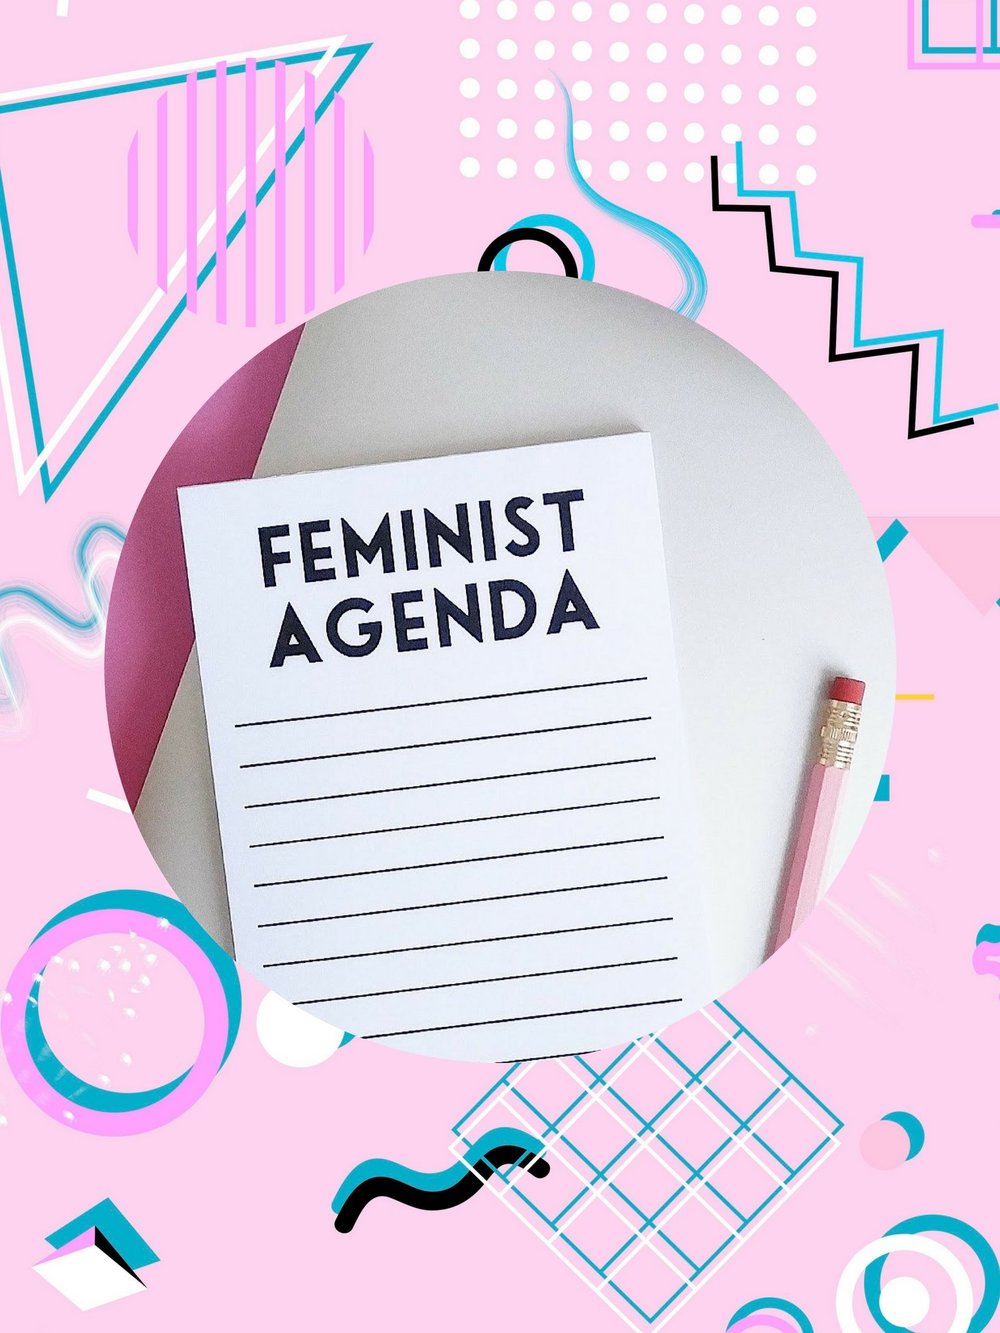 Feminist-Agenda-Notepad_1024x1024@2x.jpg